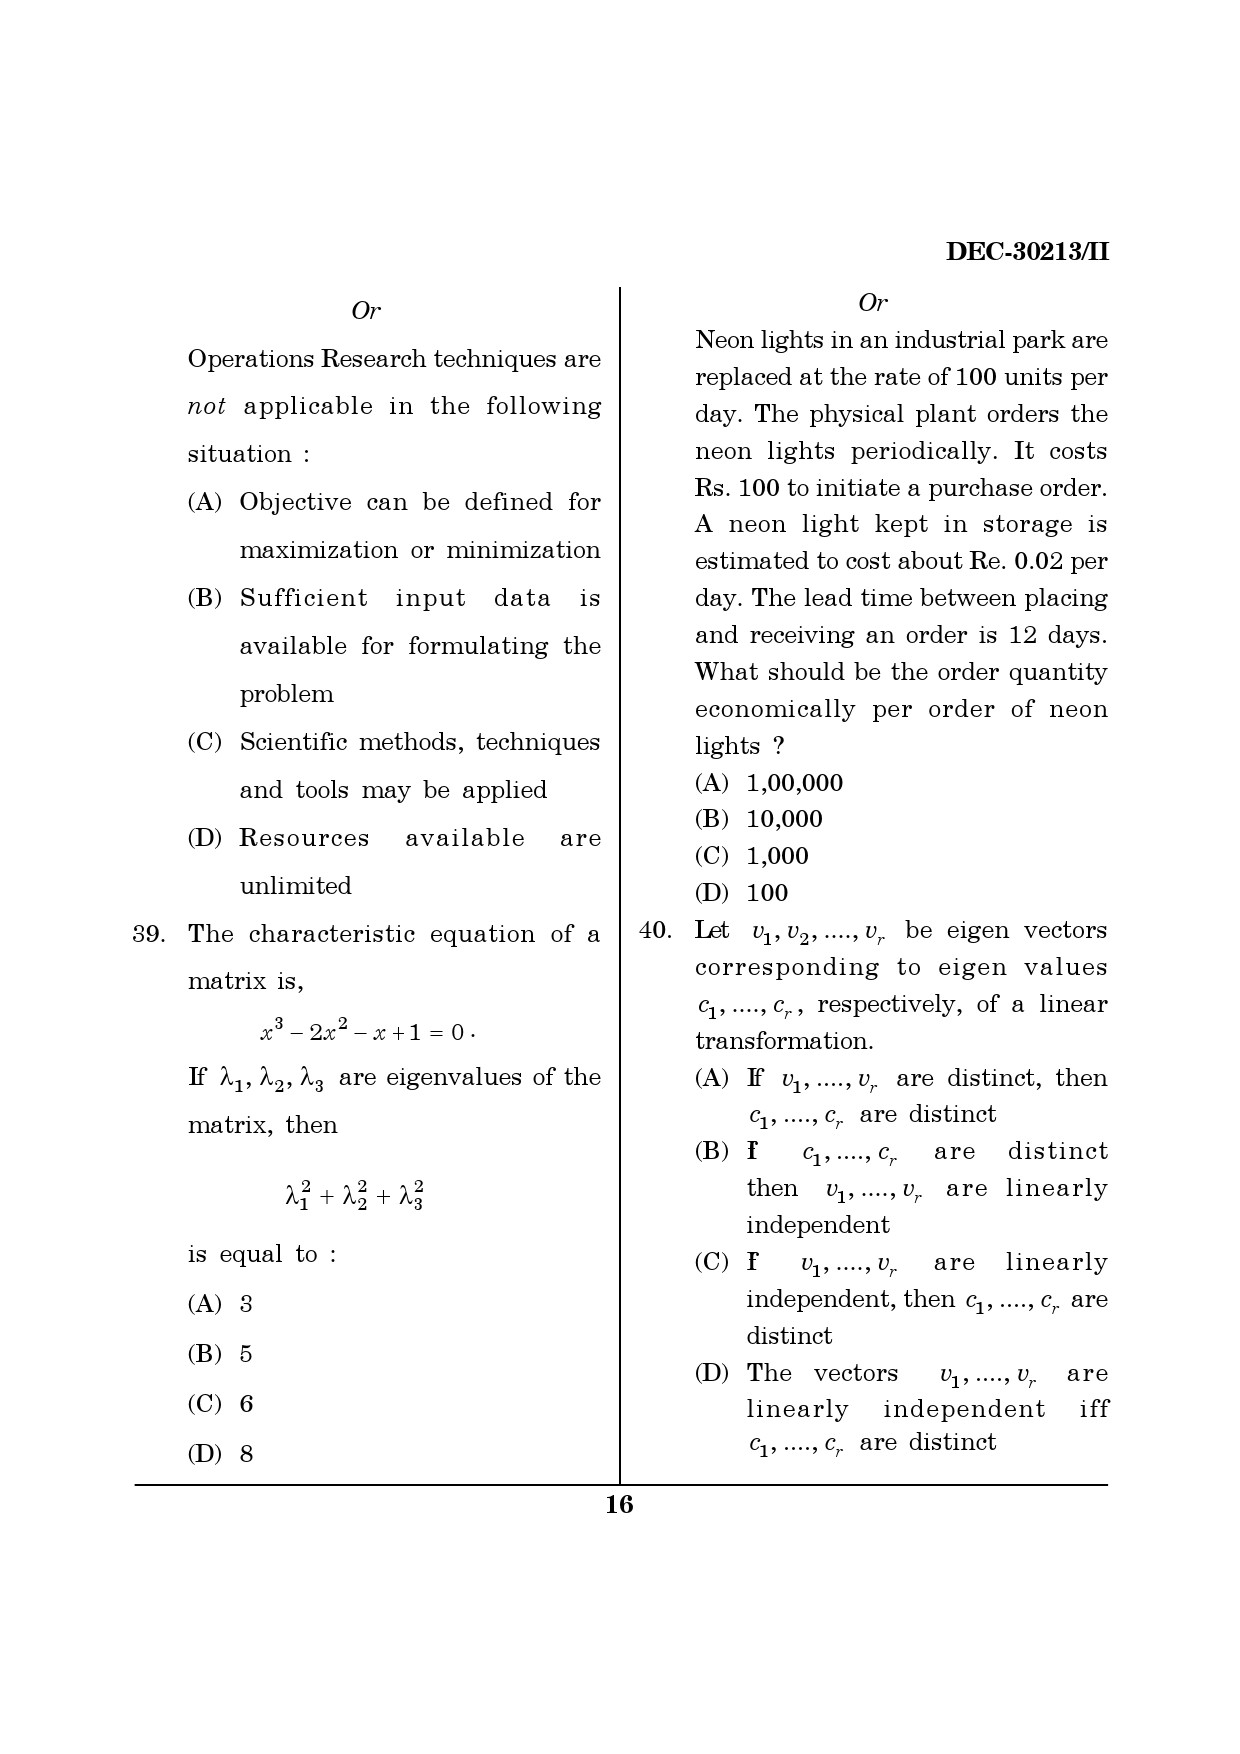 Maharashtra SET Mathematical Sciences Question Paper II December 2013 15